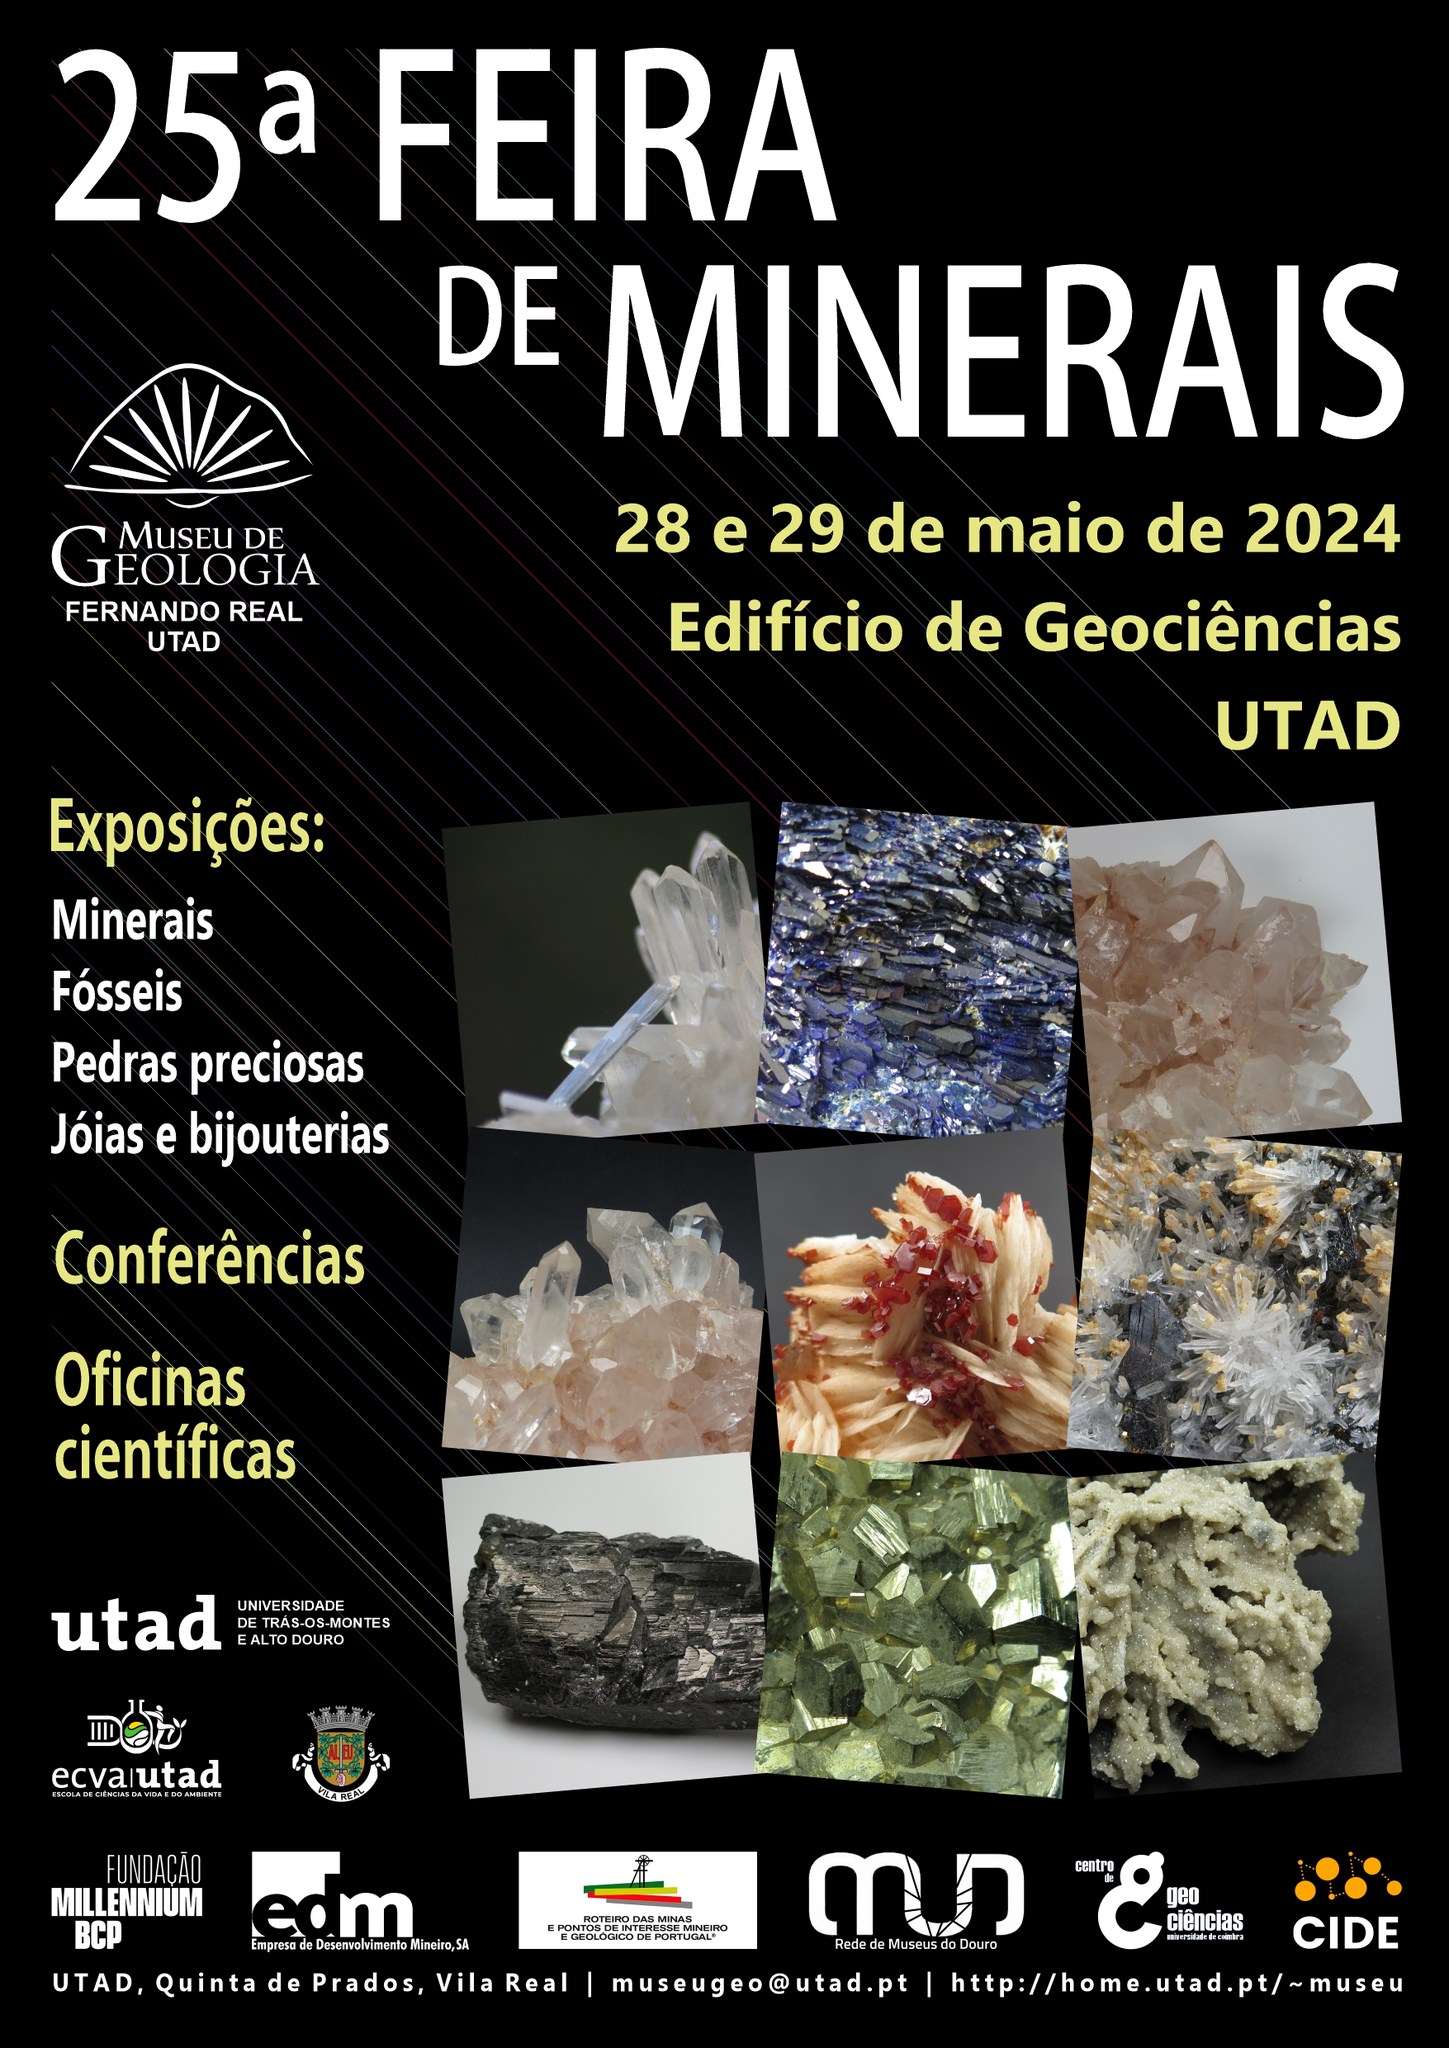 Museu de Geologia da UTAD (Vila Real)